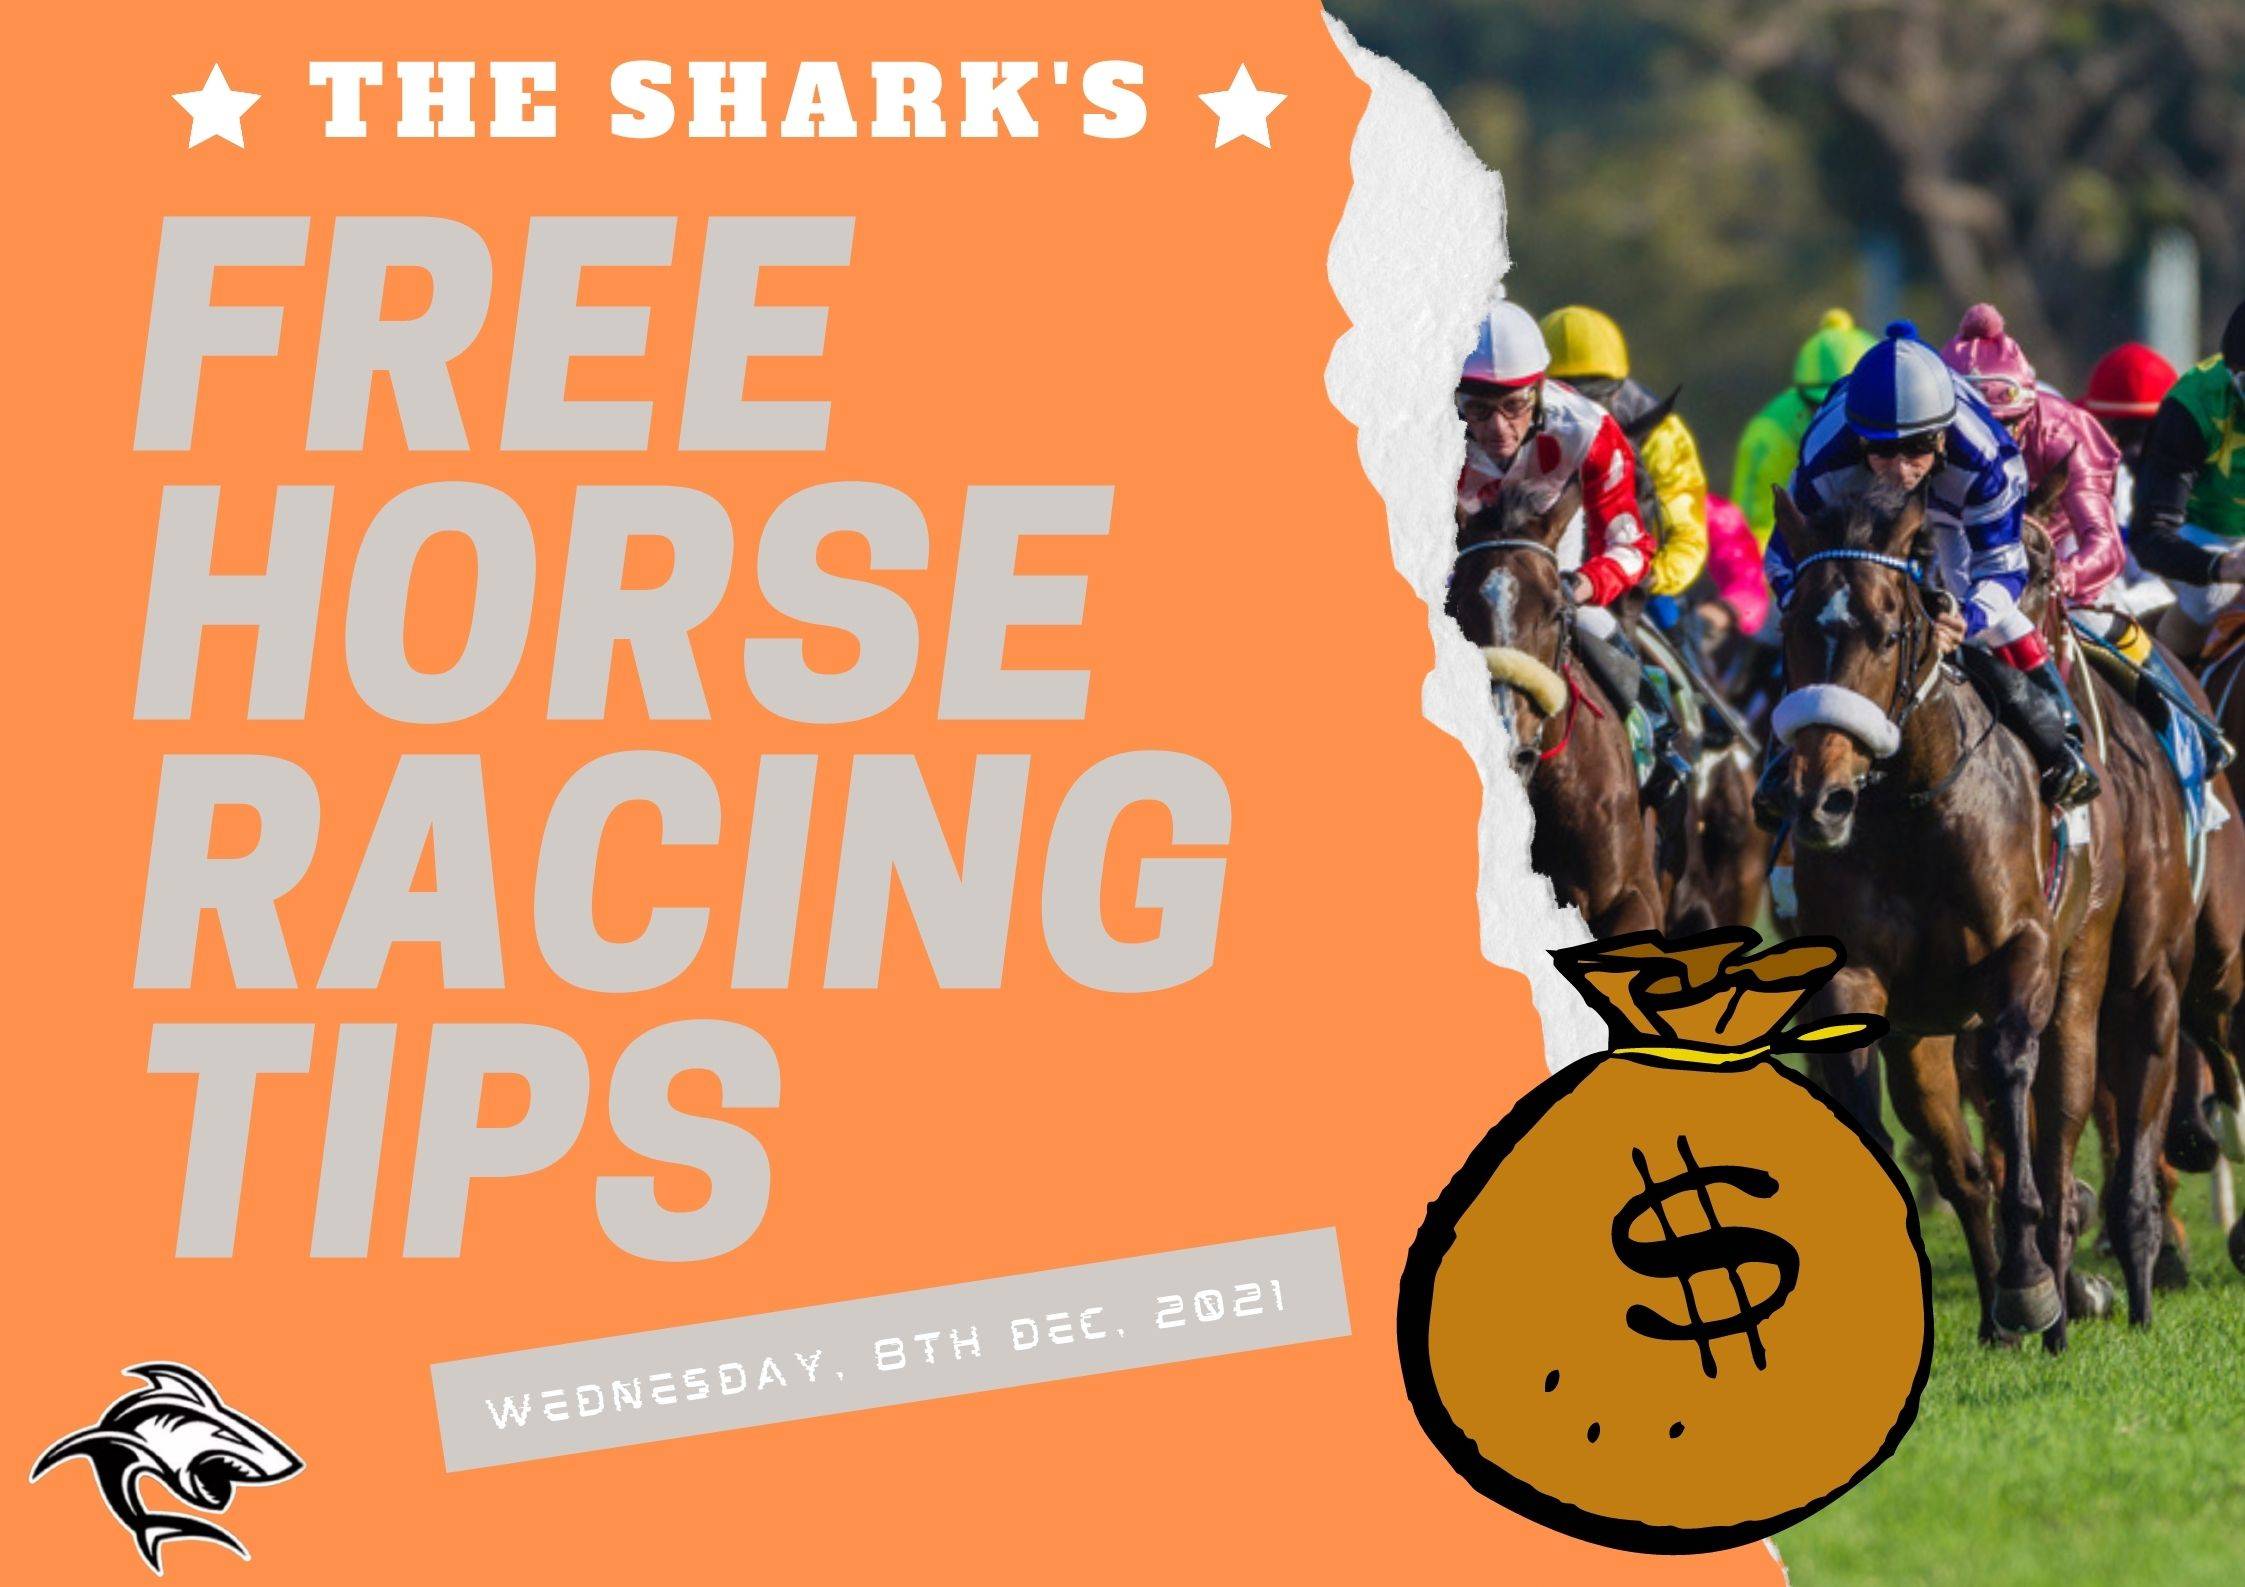 Free Horse Racing Tips - 8th Dec